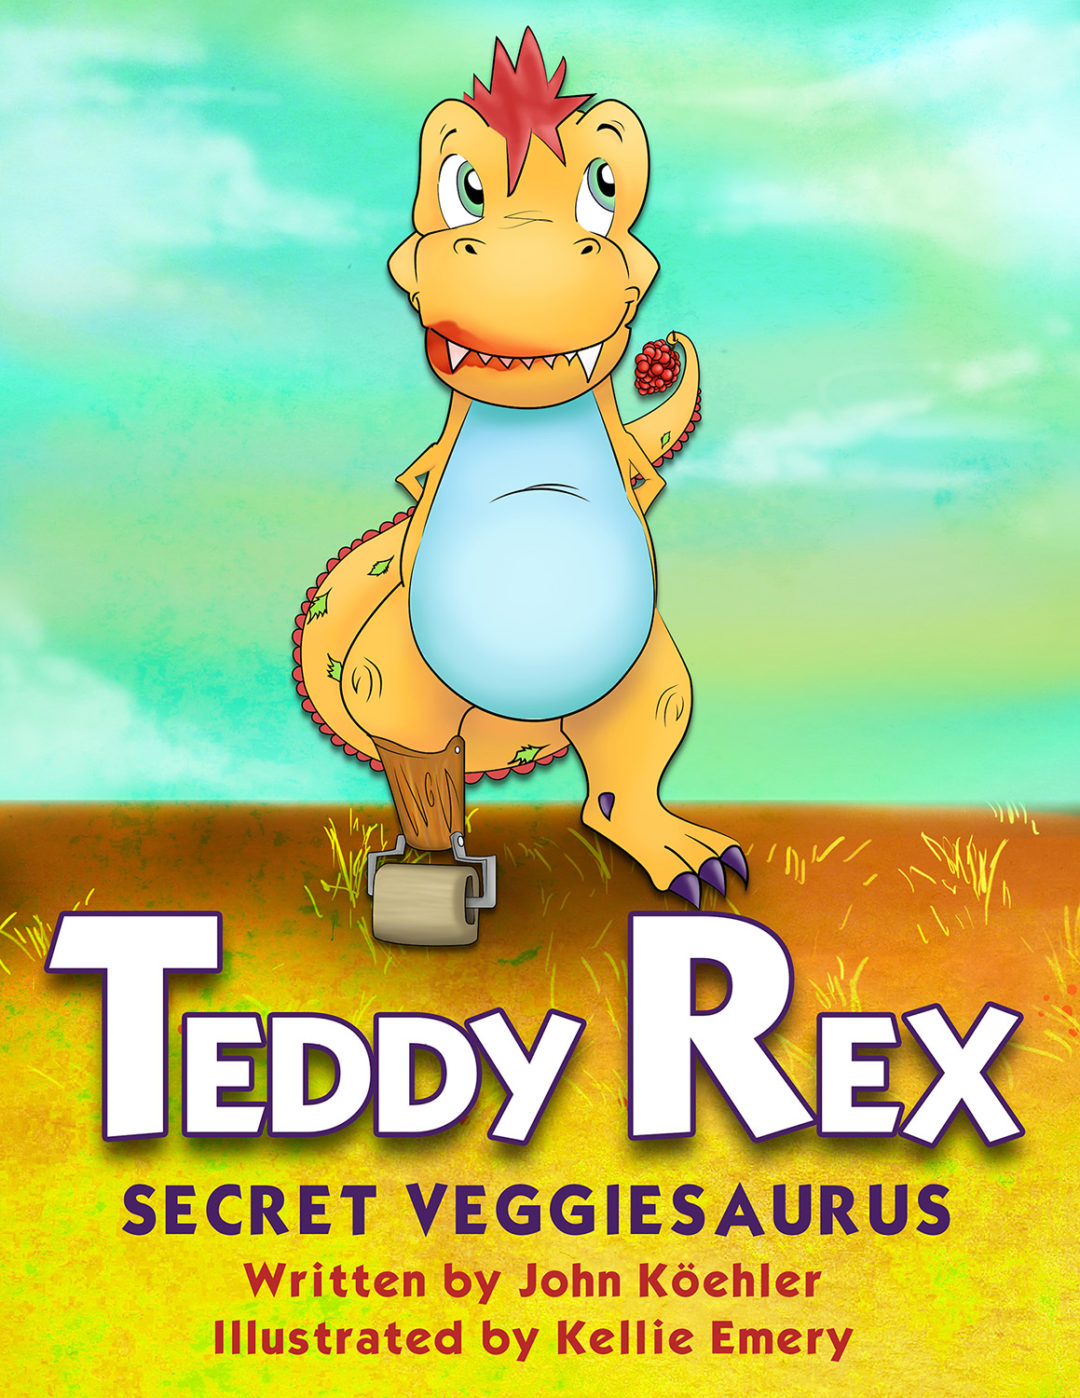 Teddy Rex: Secret Veggiesaurus